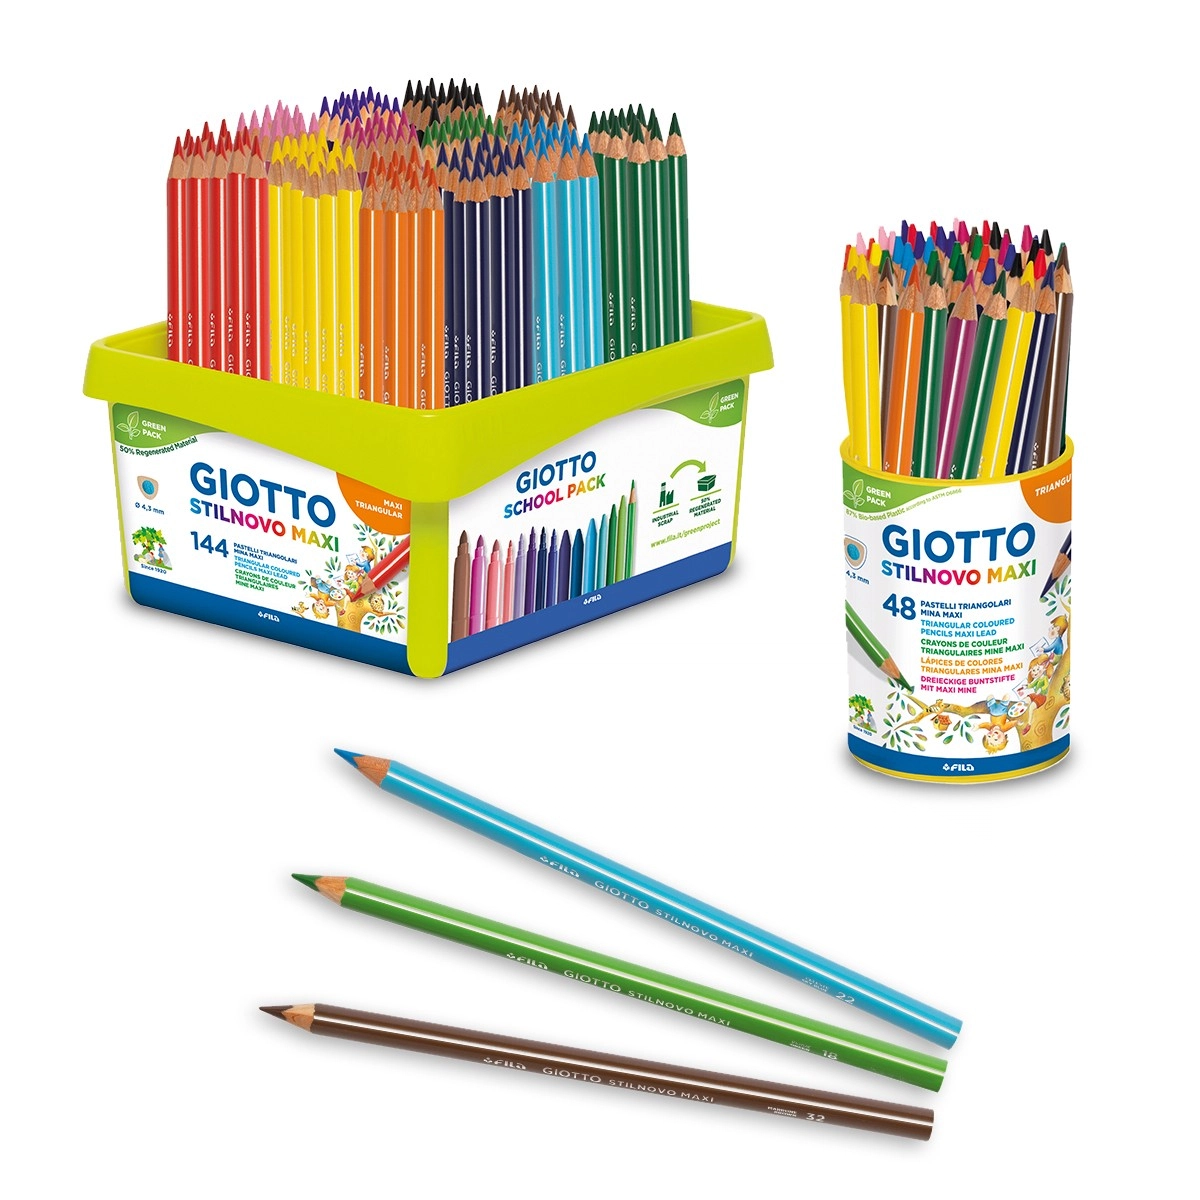 Coloured Pencils Giotto Stilnovo 50 pcs - Best European Art Materials